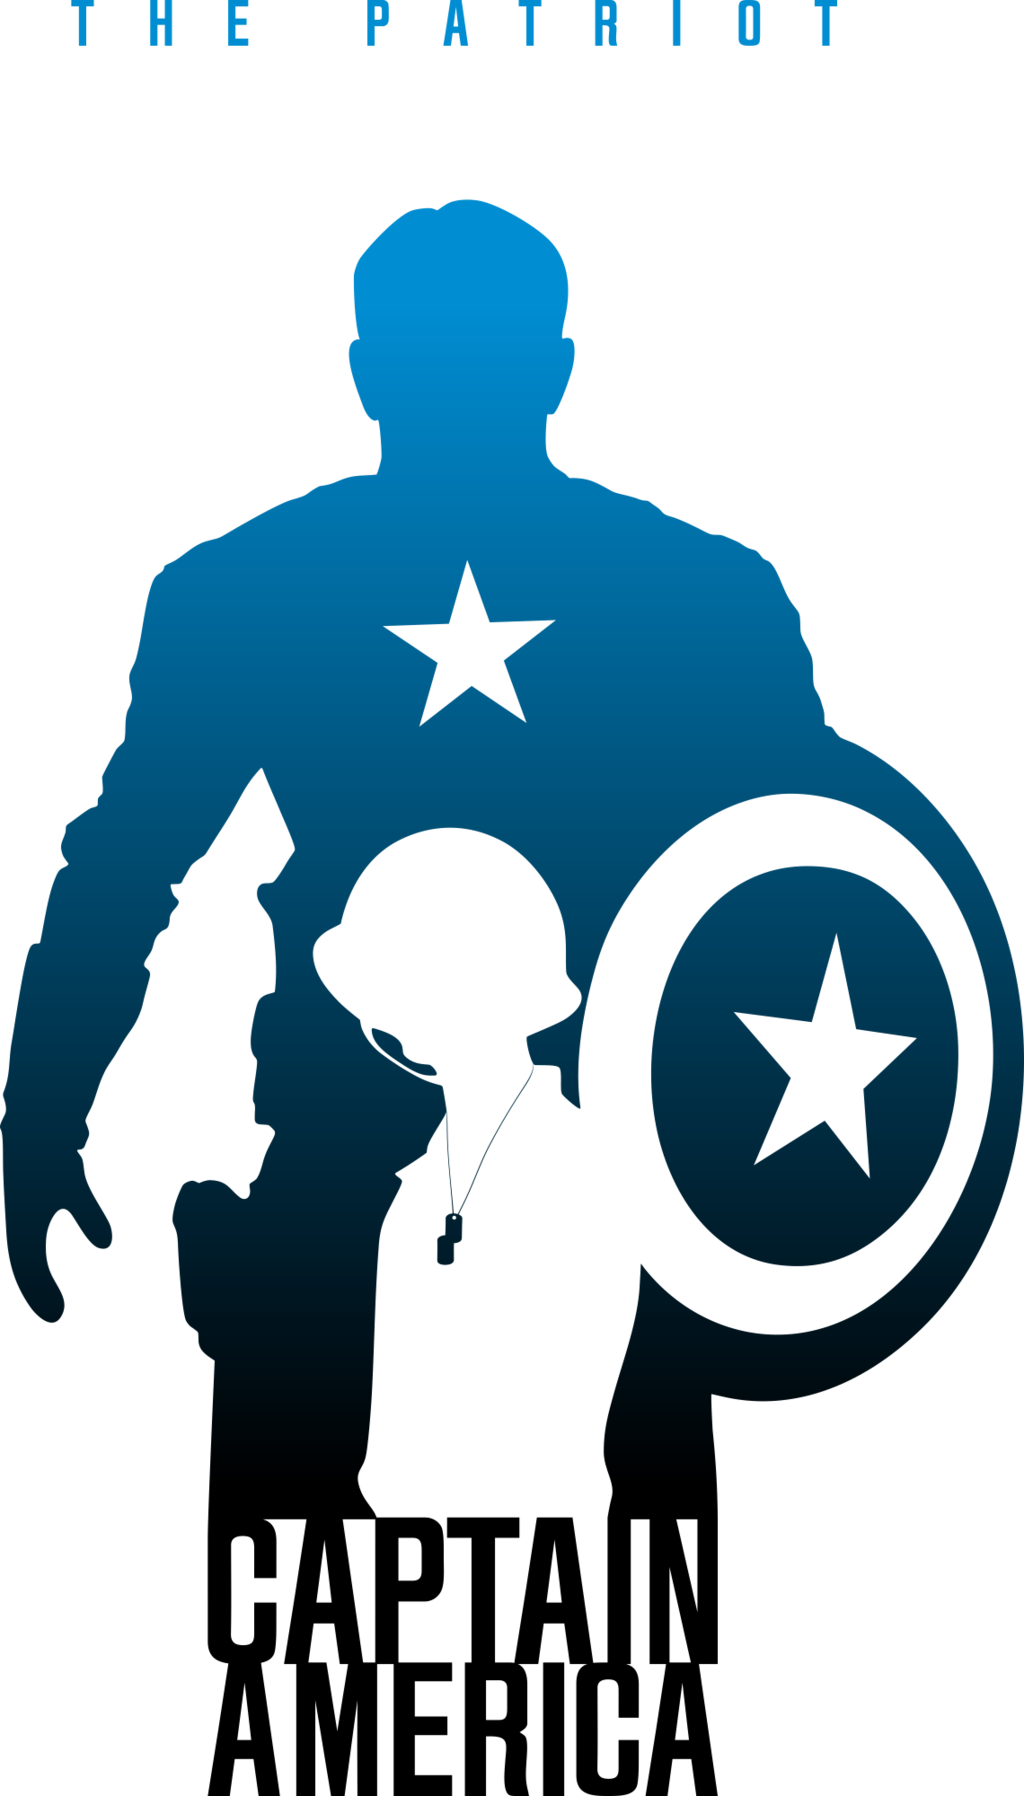 Captain America's Shield Iron Man Desktop Wallpaper - Hd Iphone 6s Wallpapers Avengers (1024x1796)